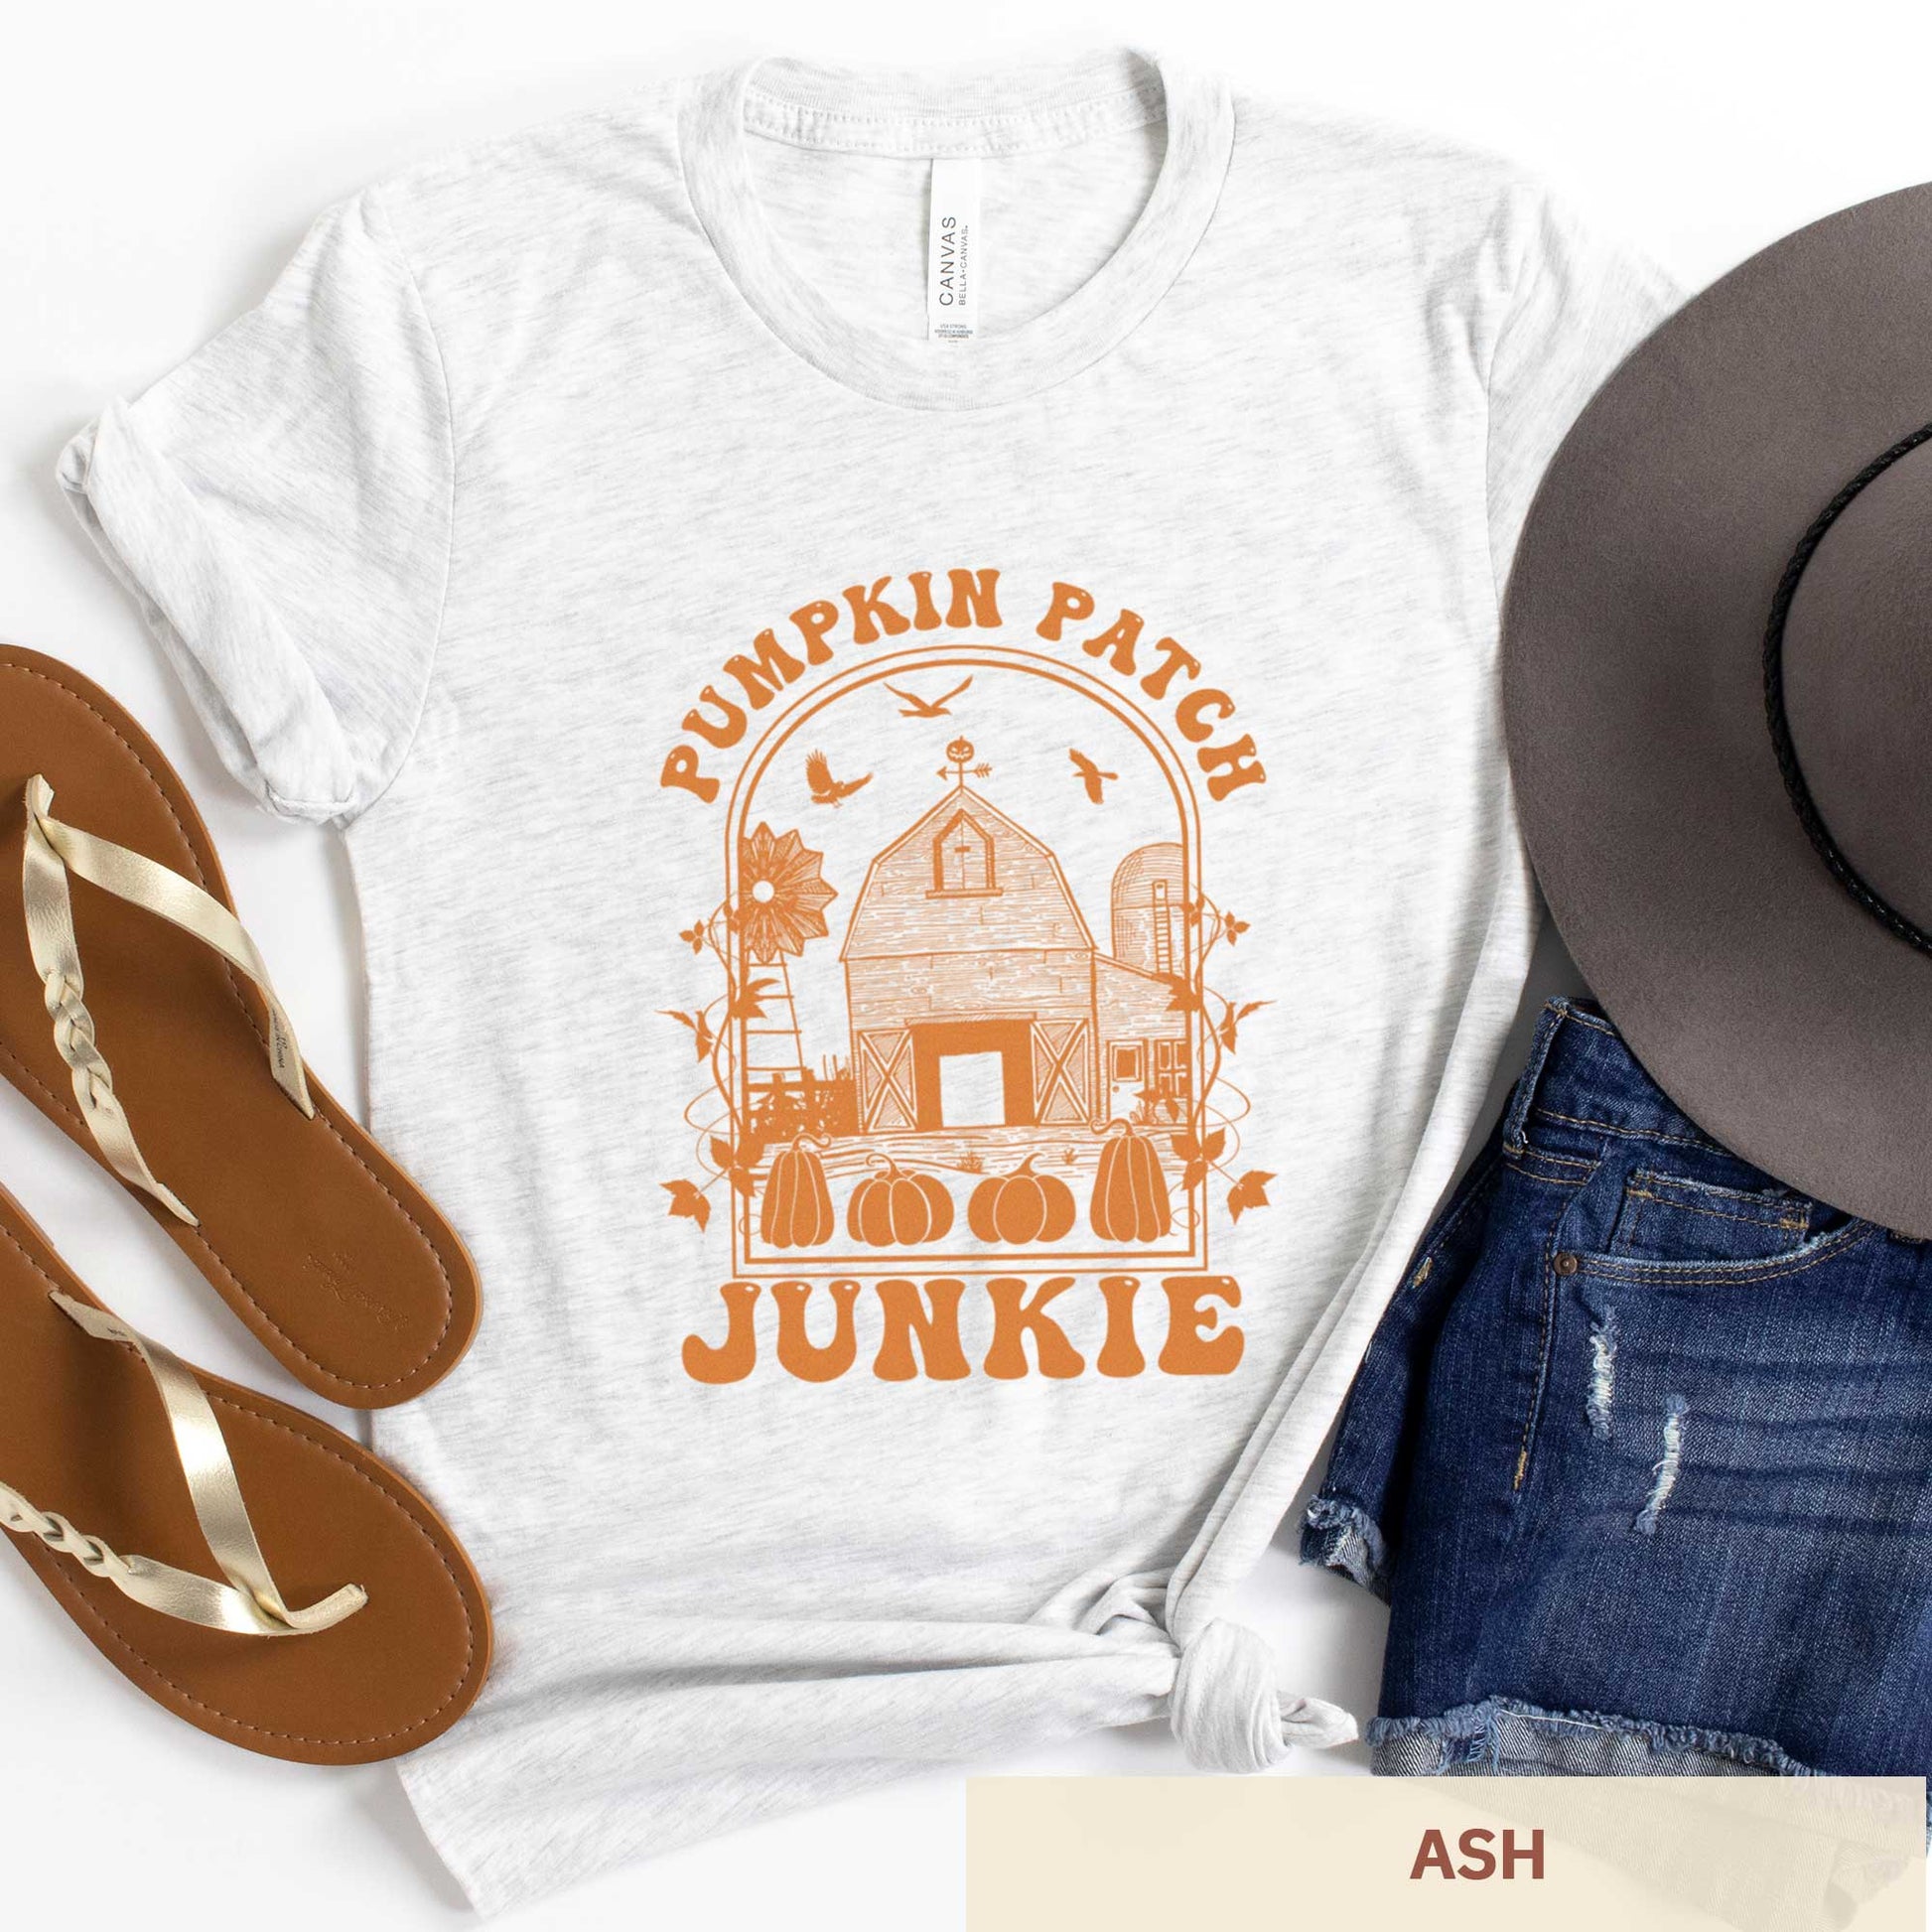 An ash Bella Canvas t-shirt featuring a farm with pumpkins that says pumpkin patch junkie.